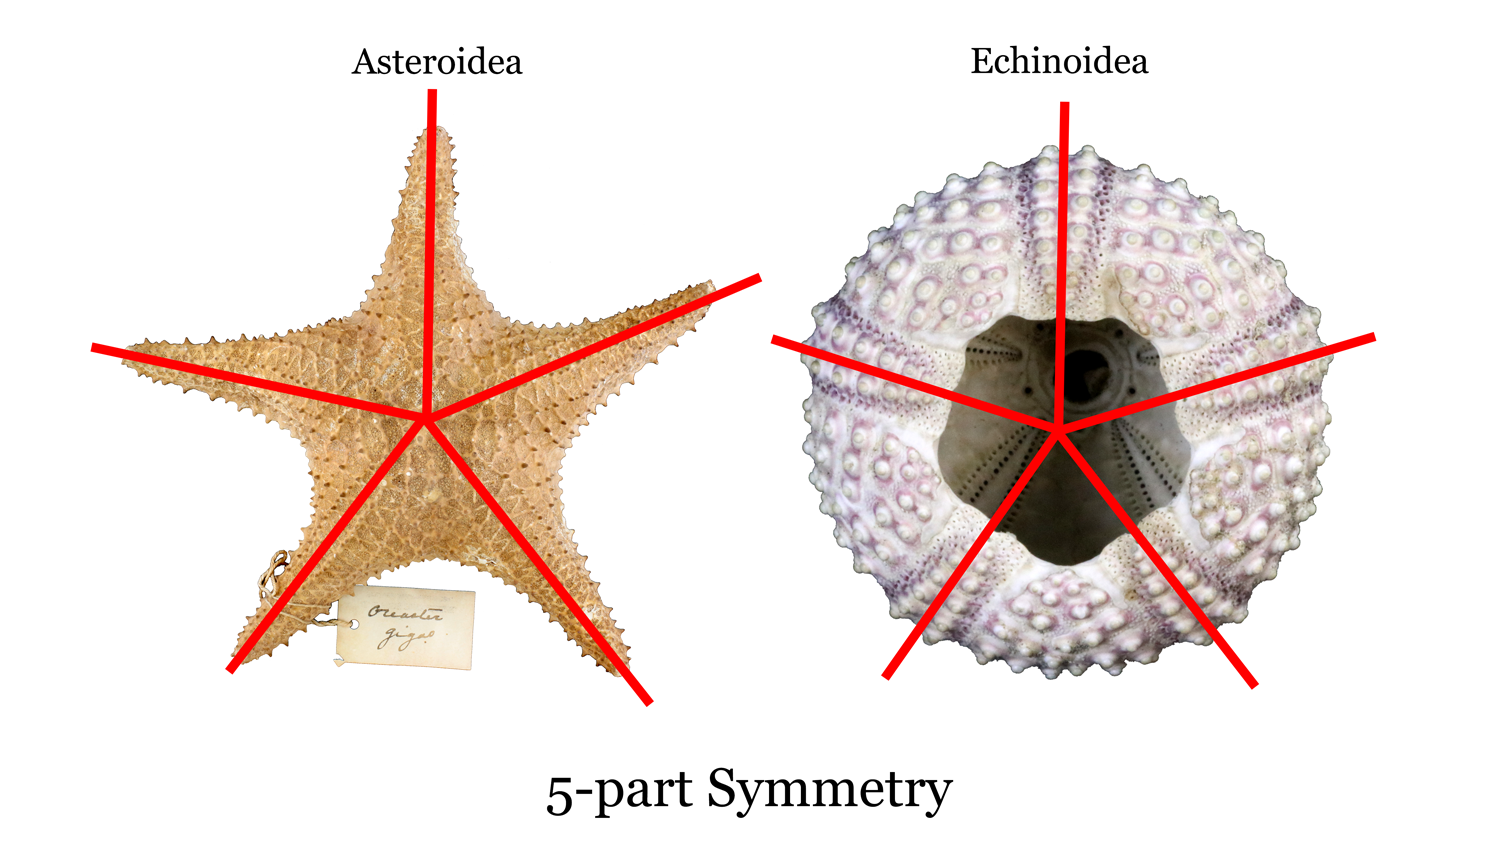 Image showing asteroidea and echinoidea pentaradial symmetry